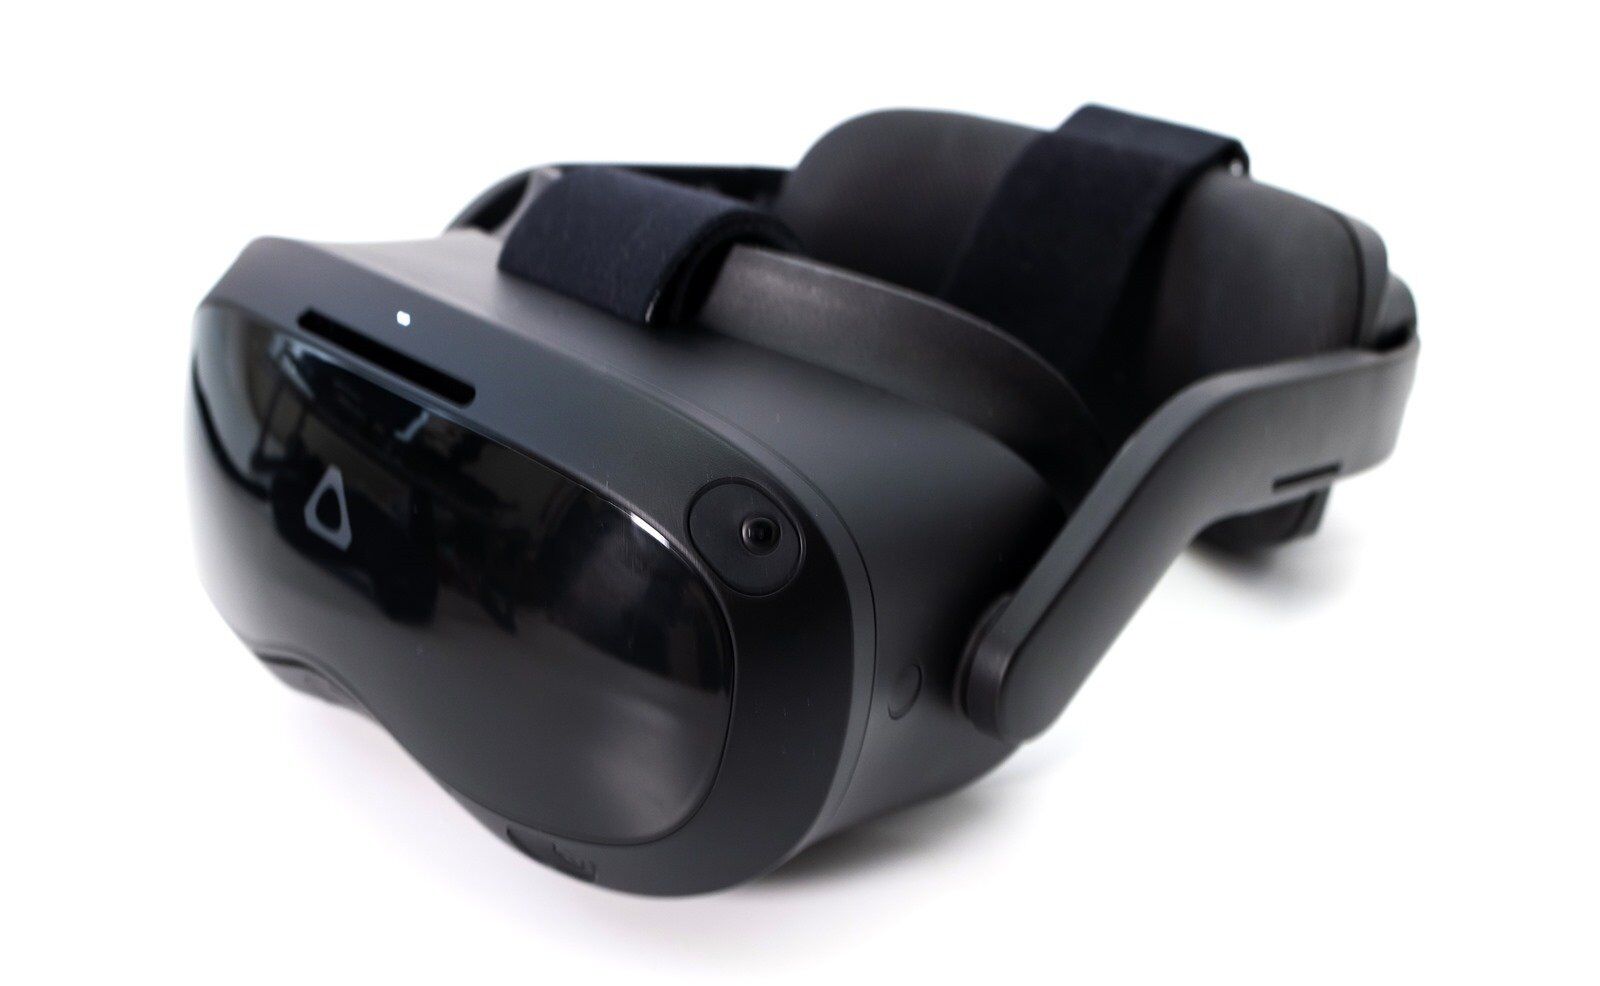 VIVE Focus 3 全球首款 5K 旗艦級 VR 一體機 (2) 最強 VR 商務解決方案 + 桌面串流 VR 試玩！ @3C 達人廖阿輝